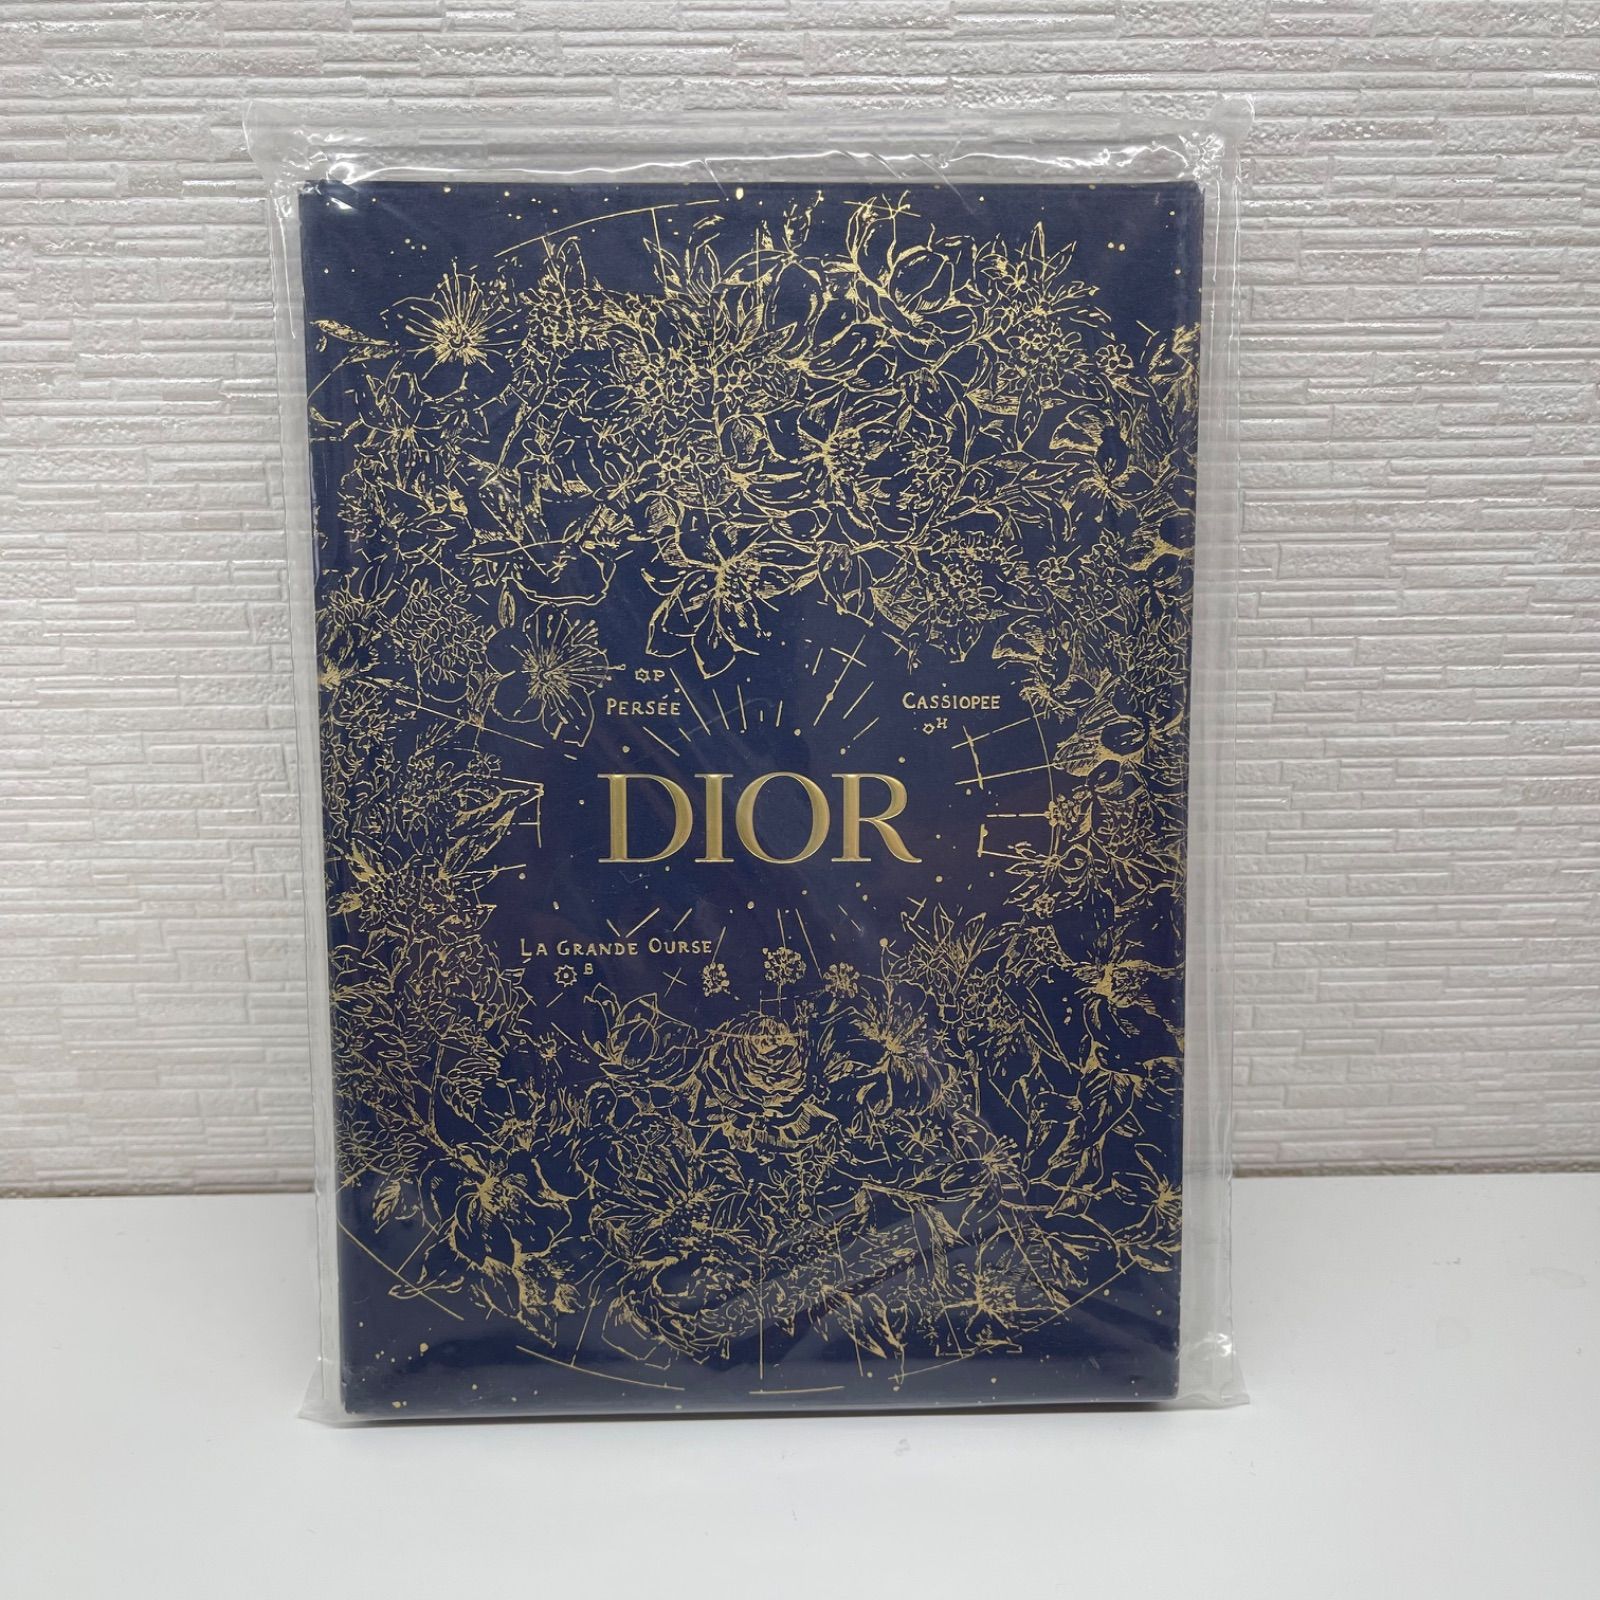 Dior ノベルティ 手帳 ノート ゴールド - 手帳・日記・家計簿